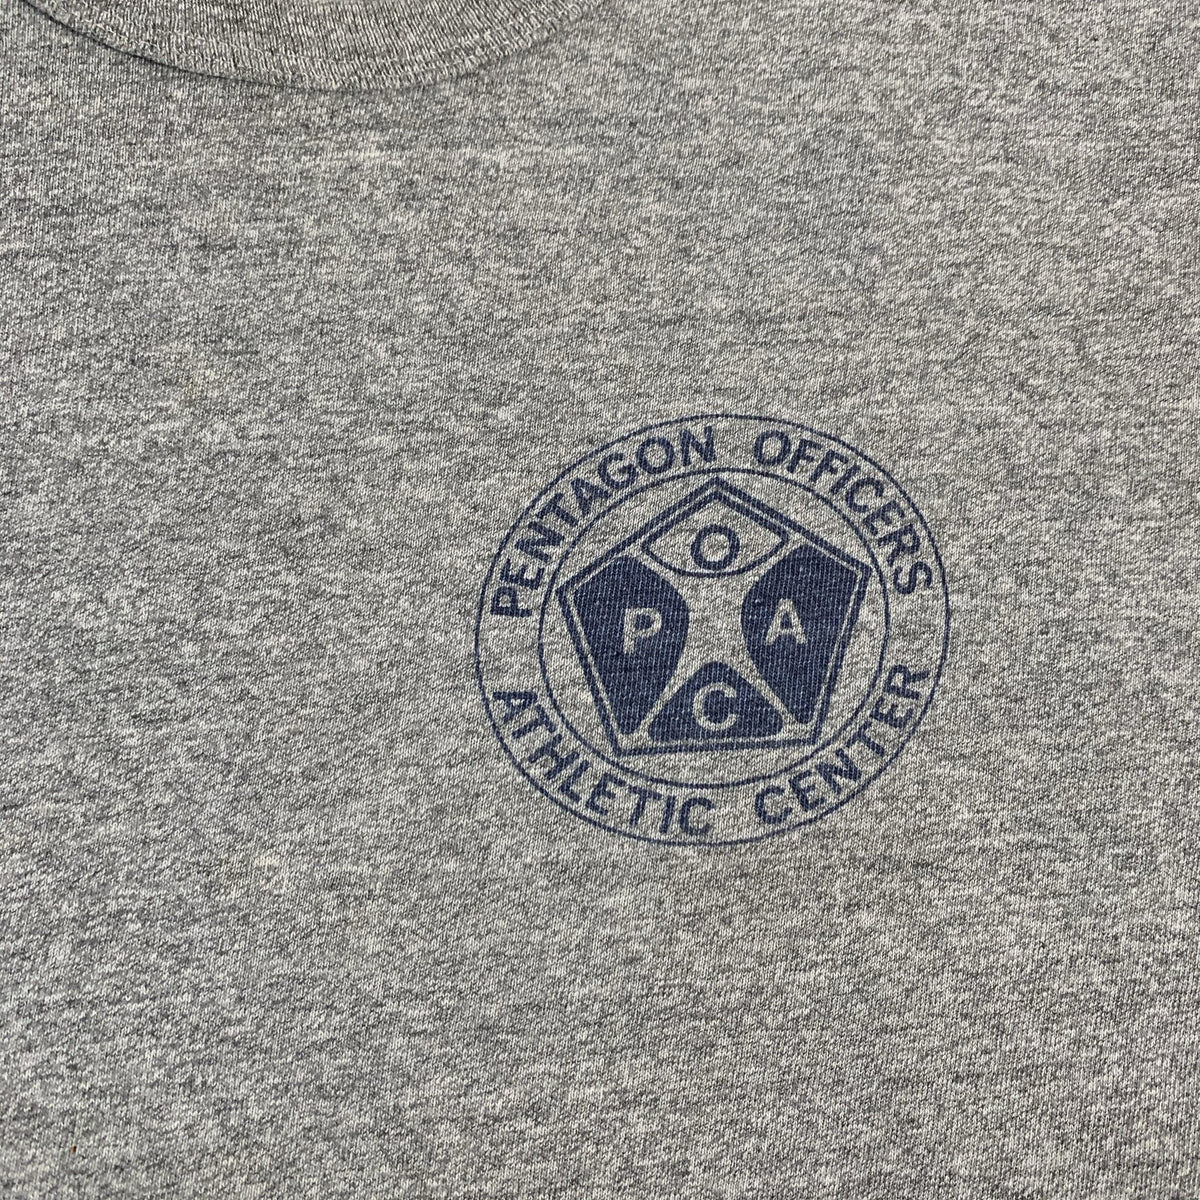 Vintage Champion “Pentagon Officers” T-Shirt - jointcustodydc